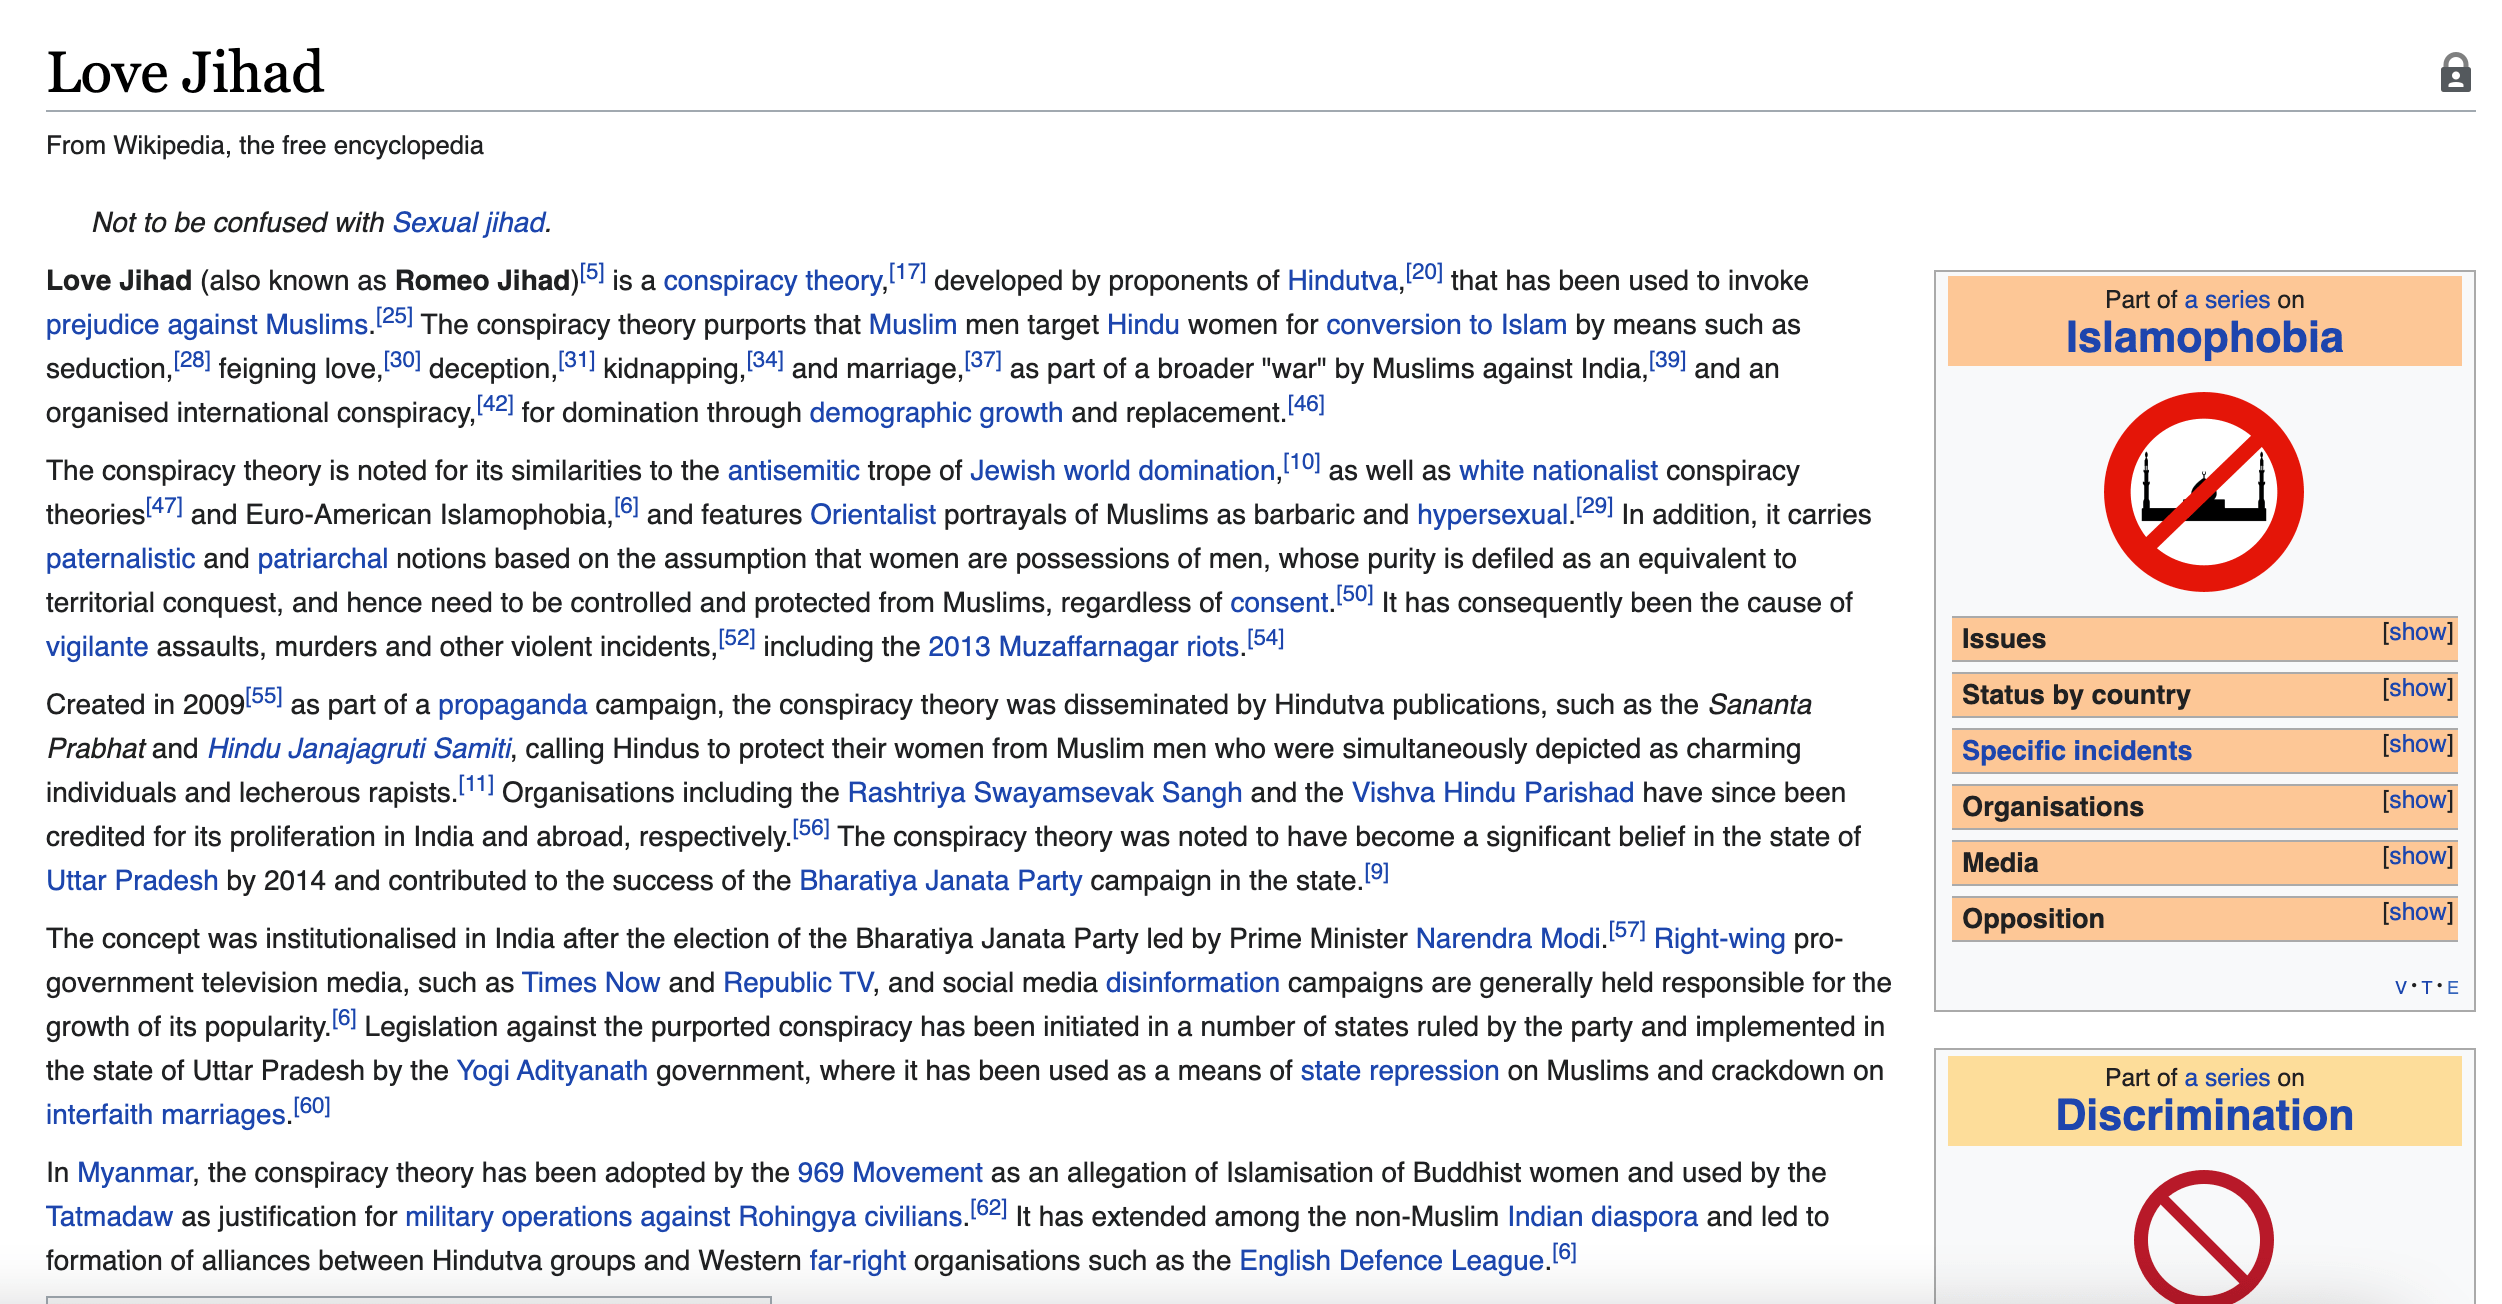 Wikipedia dismisses Love Jihad